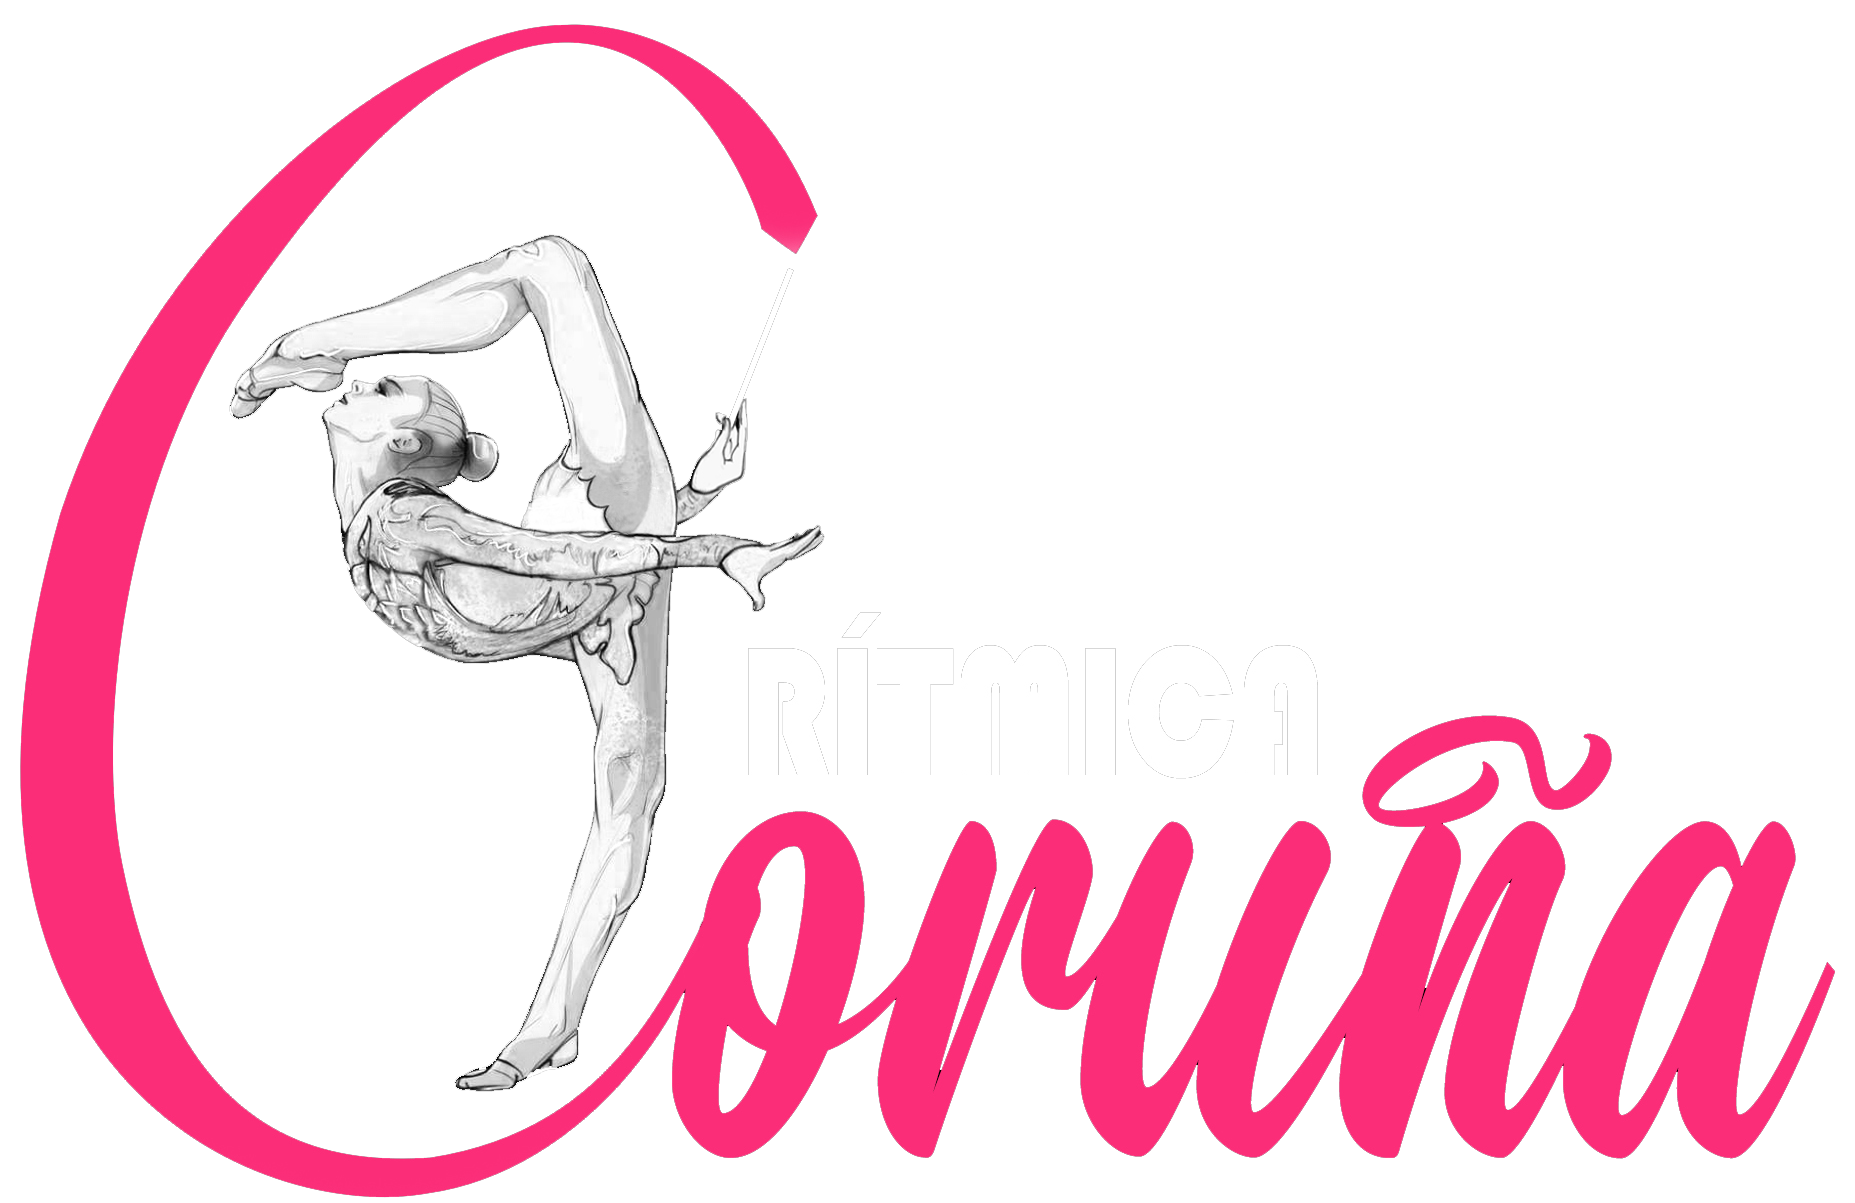 Club Rítmica Coruña